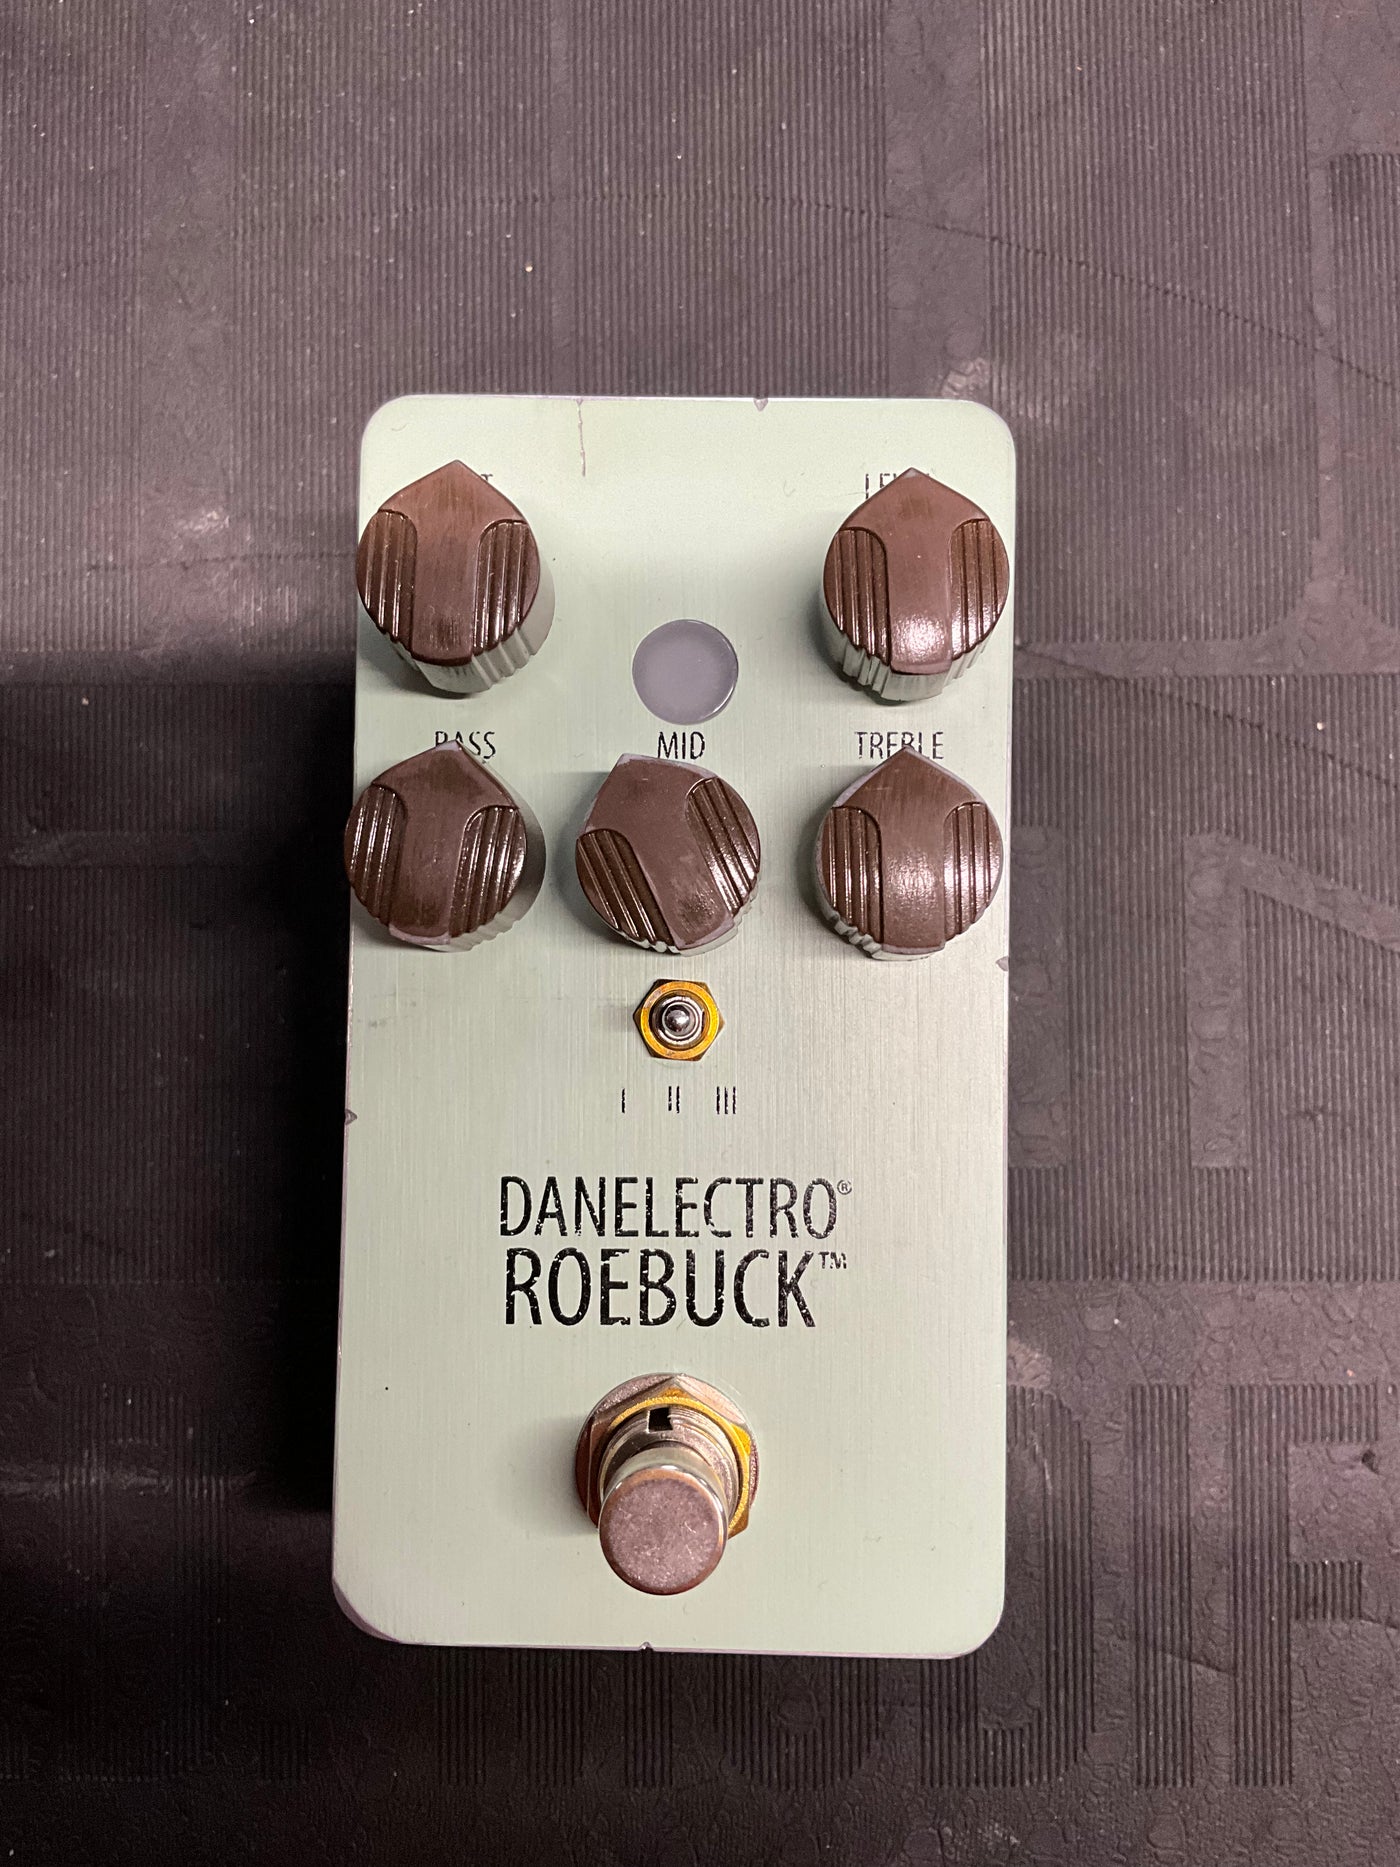 Danelectro Roebuck Distortion Pedal